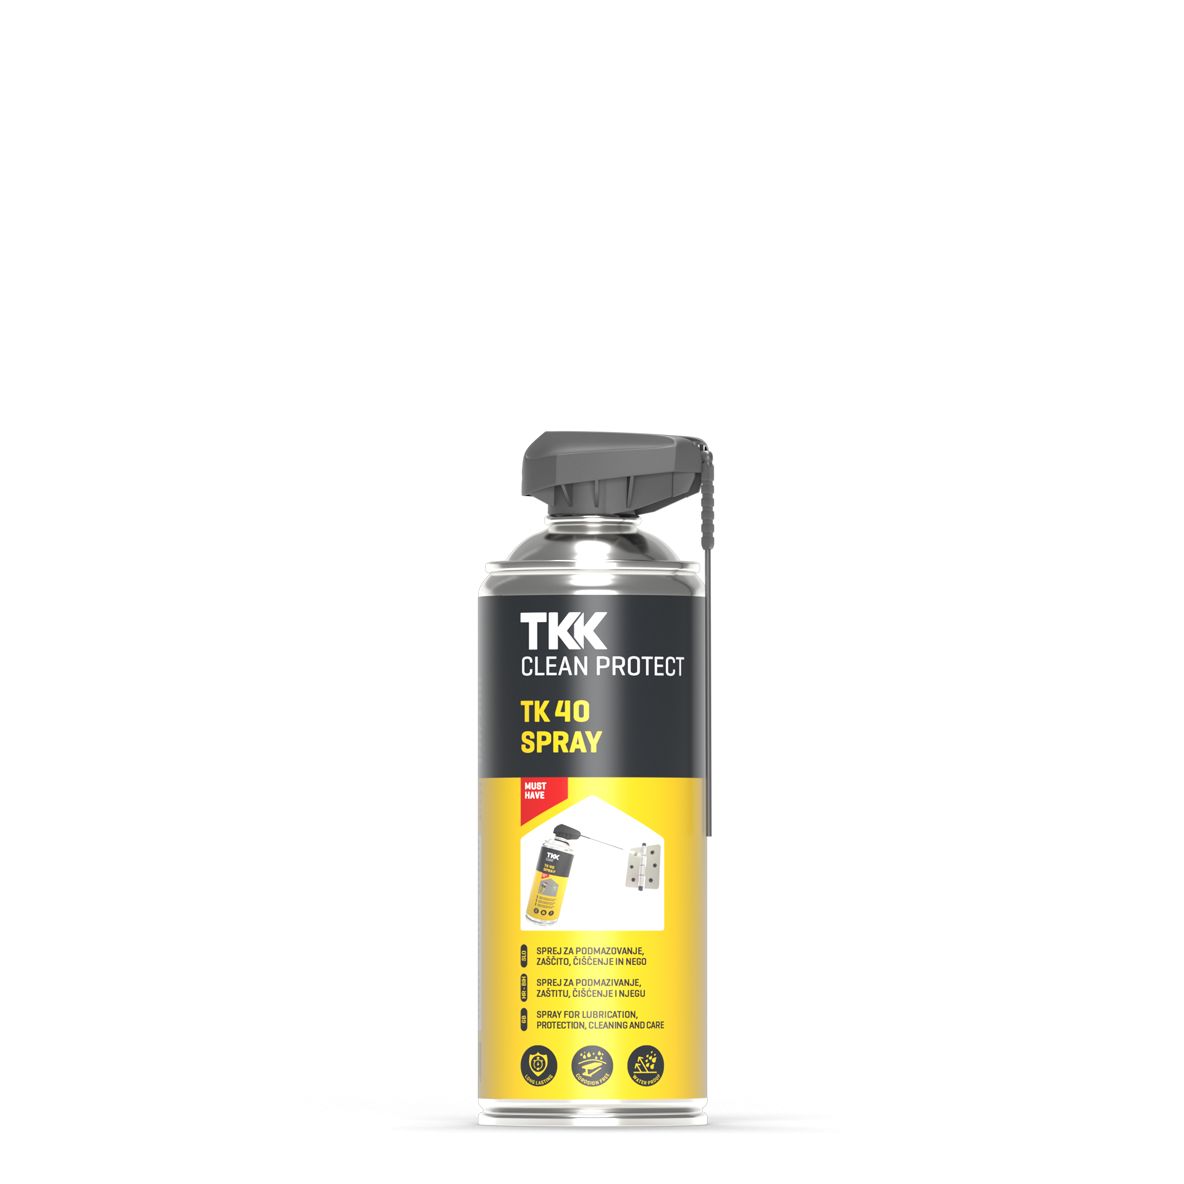 TKK Clean Protect Tk 40